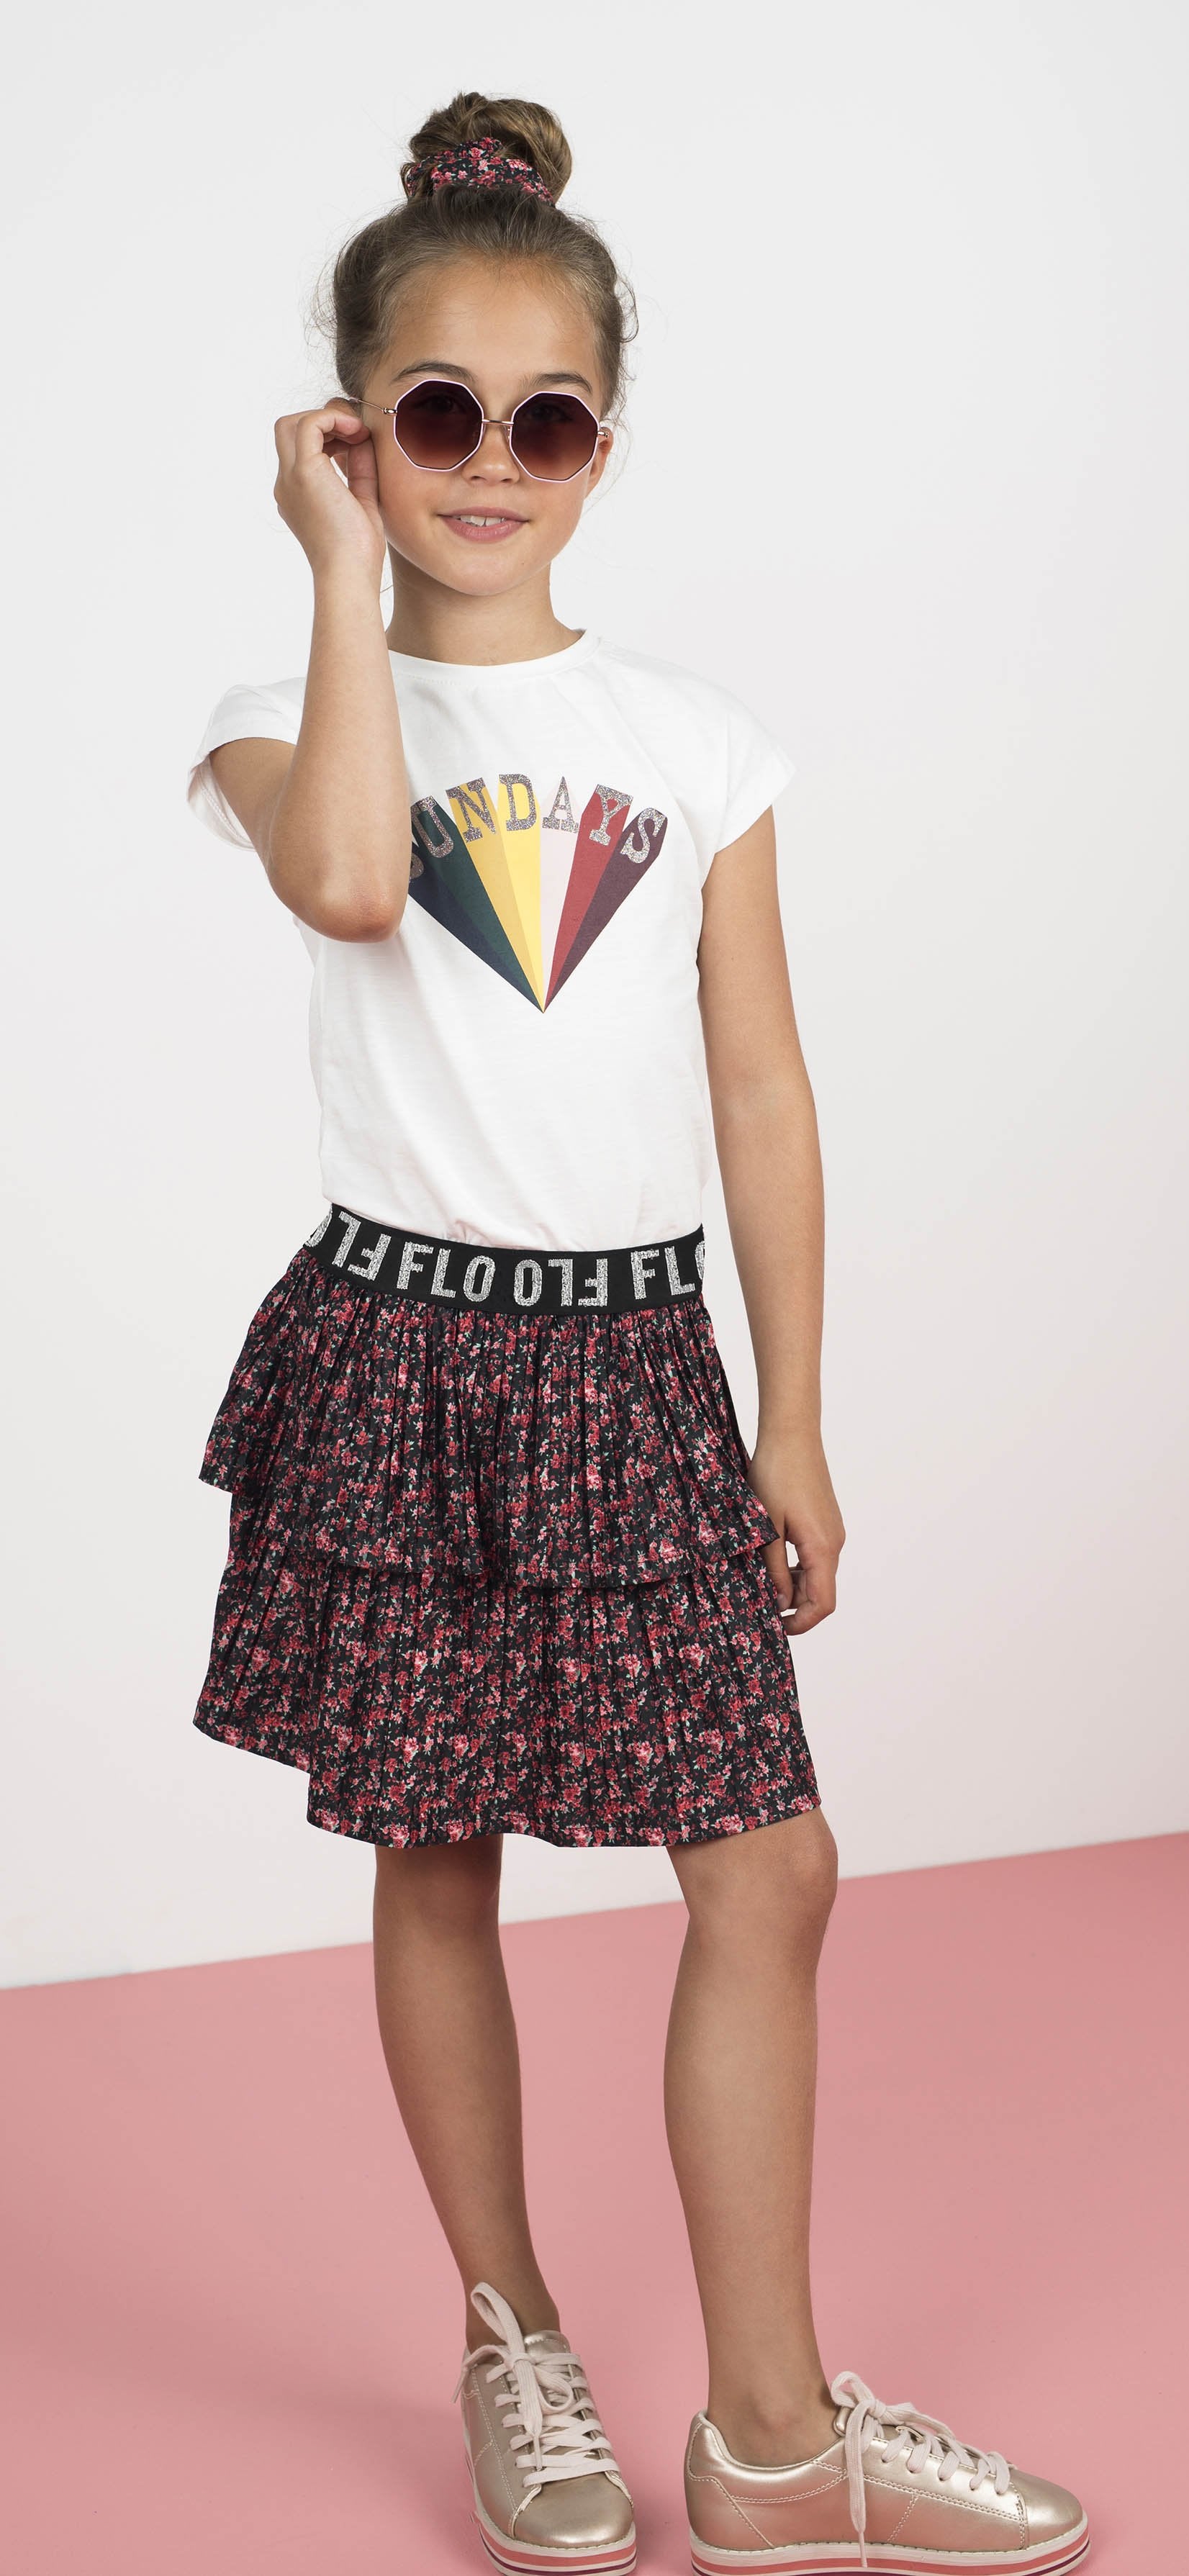 Meisjes Flo girls AO shiny jersey plisse skirt 2 layer van Flo in de kleur Flower in maat 152.